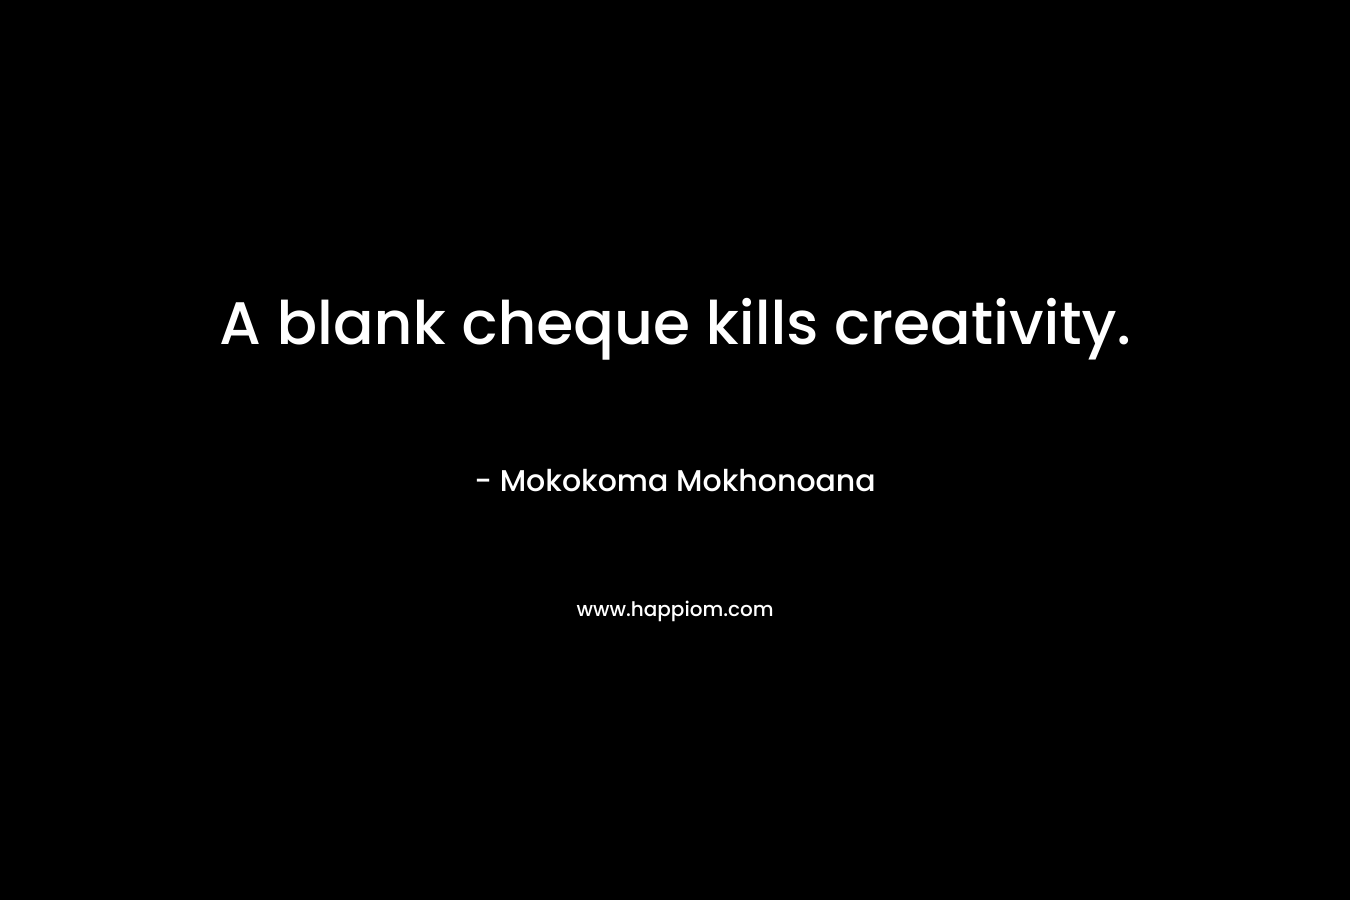 A blank cheque kills creativity.